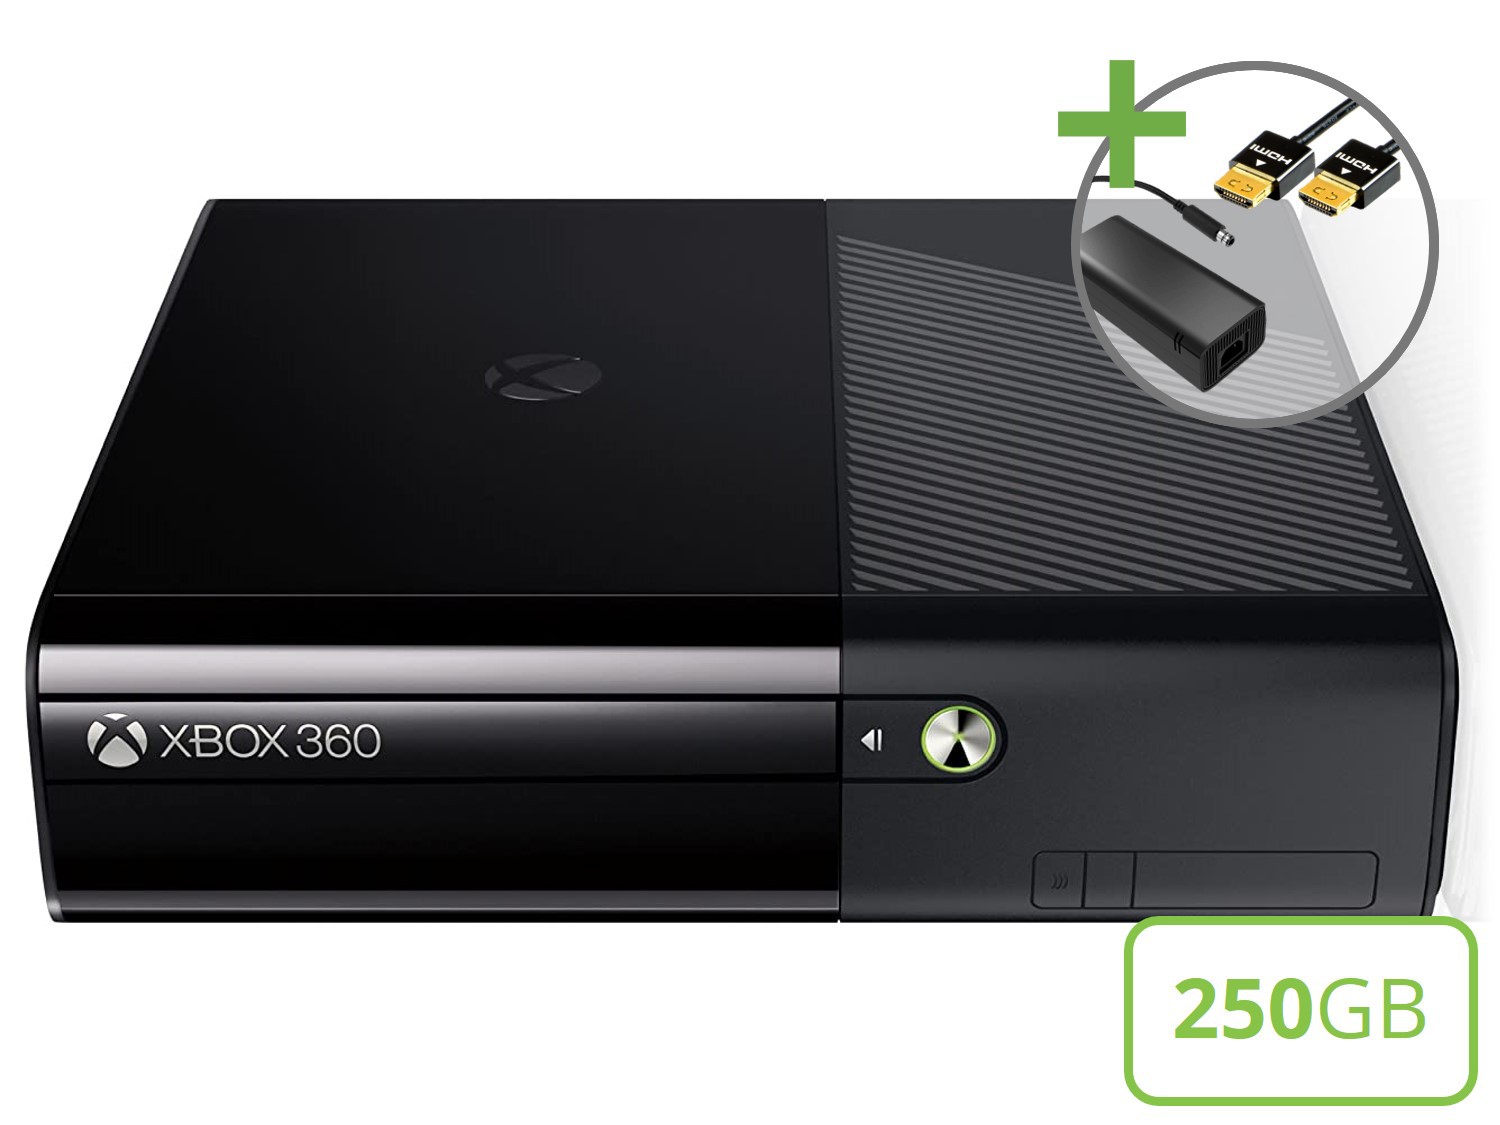 Microsoft Xbox 360 New Slim Starter Pack - 250GB Call of Duty Edition - Xbox 360 Hardware - 2